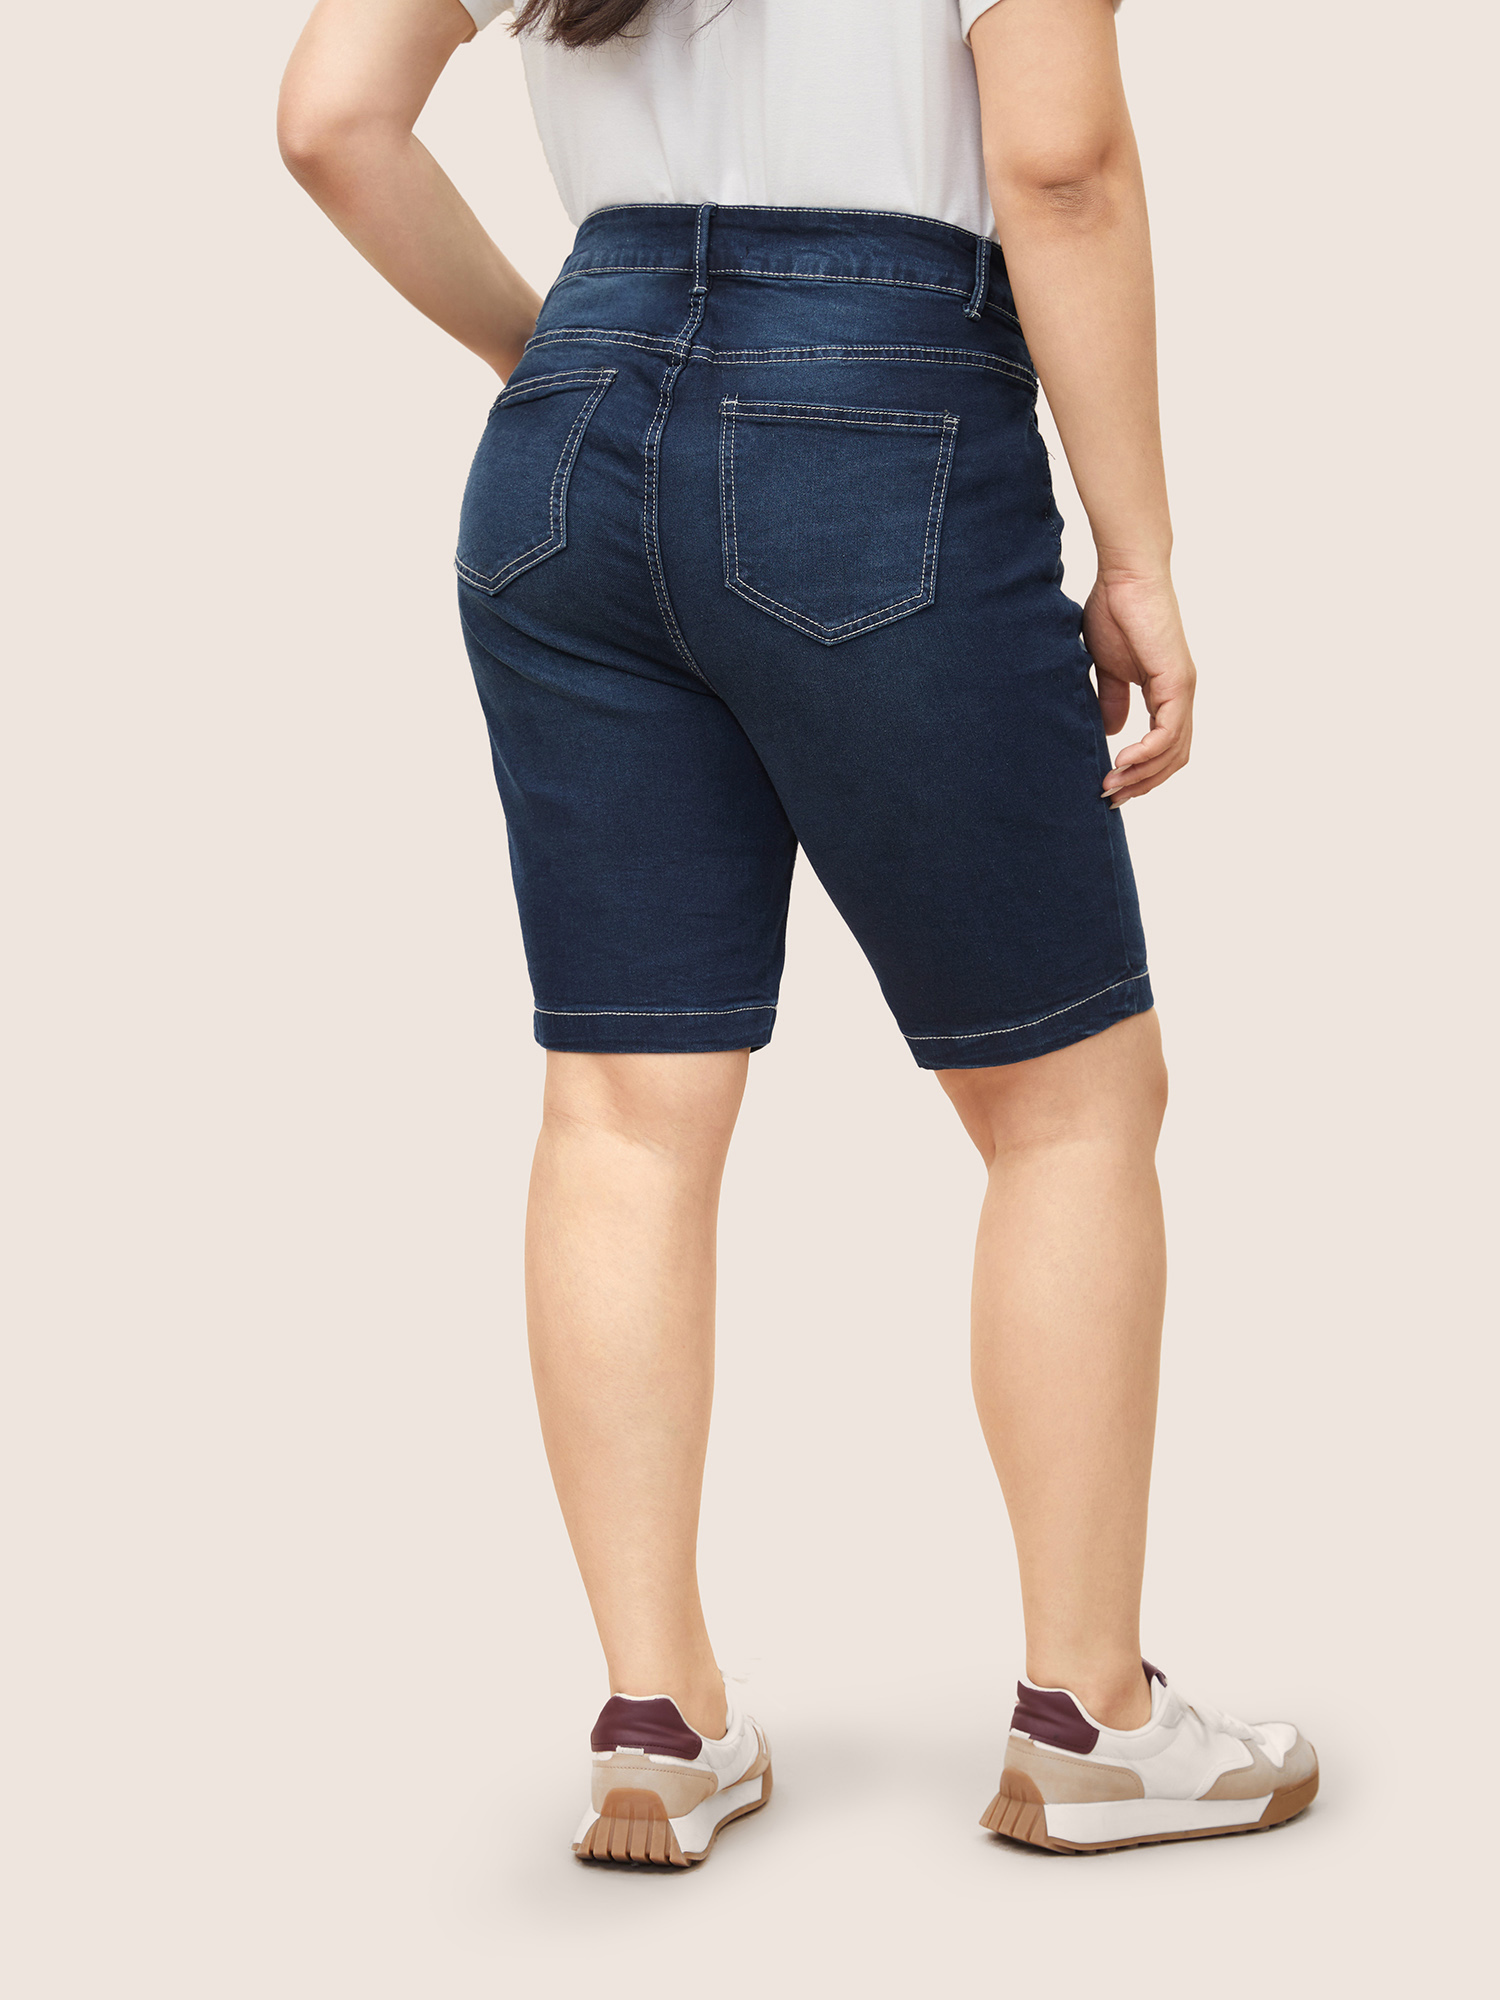 

Plus Size Very Stretchy High Rise Dark Wash Denim Shorts Women DarkBlue Casual Plain High stretch Slanted pocket Jeans BloomChic